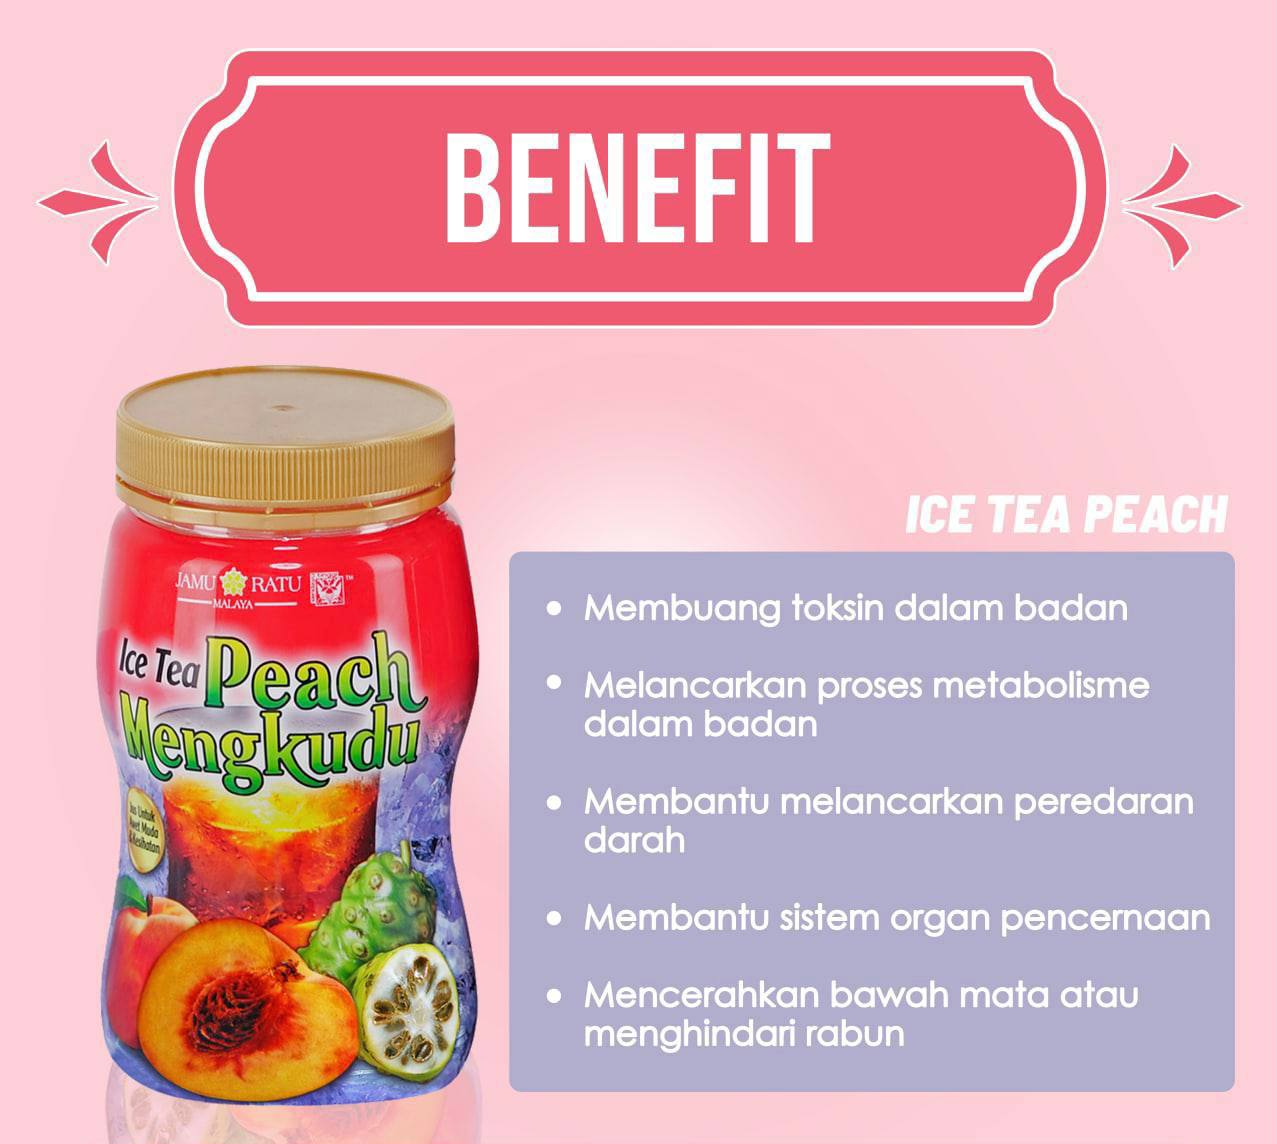 JRM (Jamu Ratu Malaya) - Ice Tea Peach Mengkudu 300g